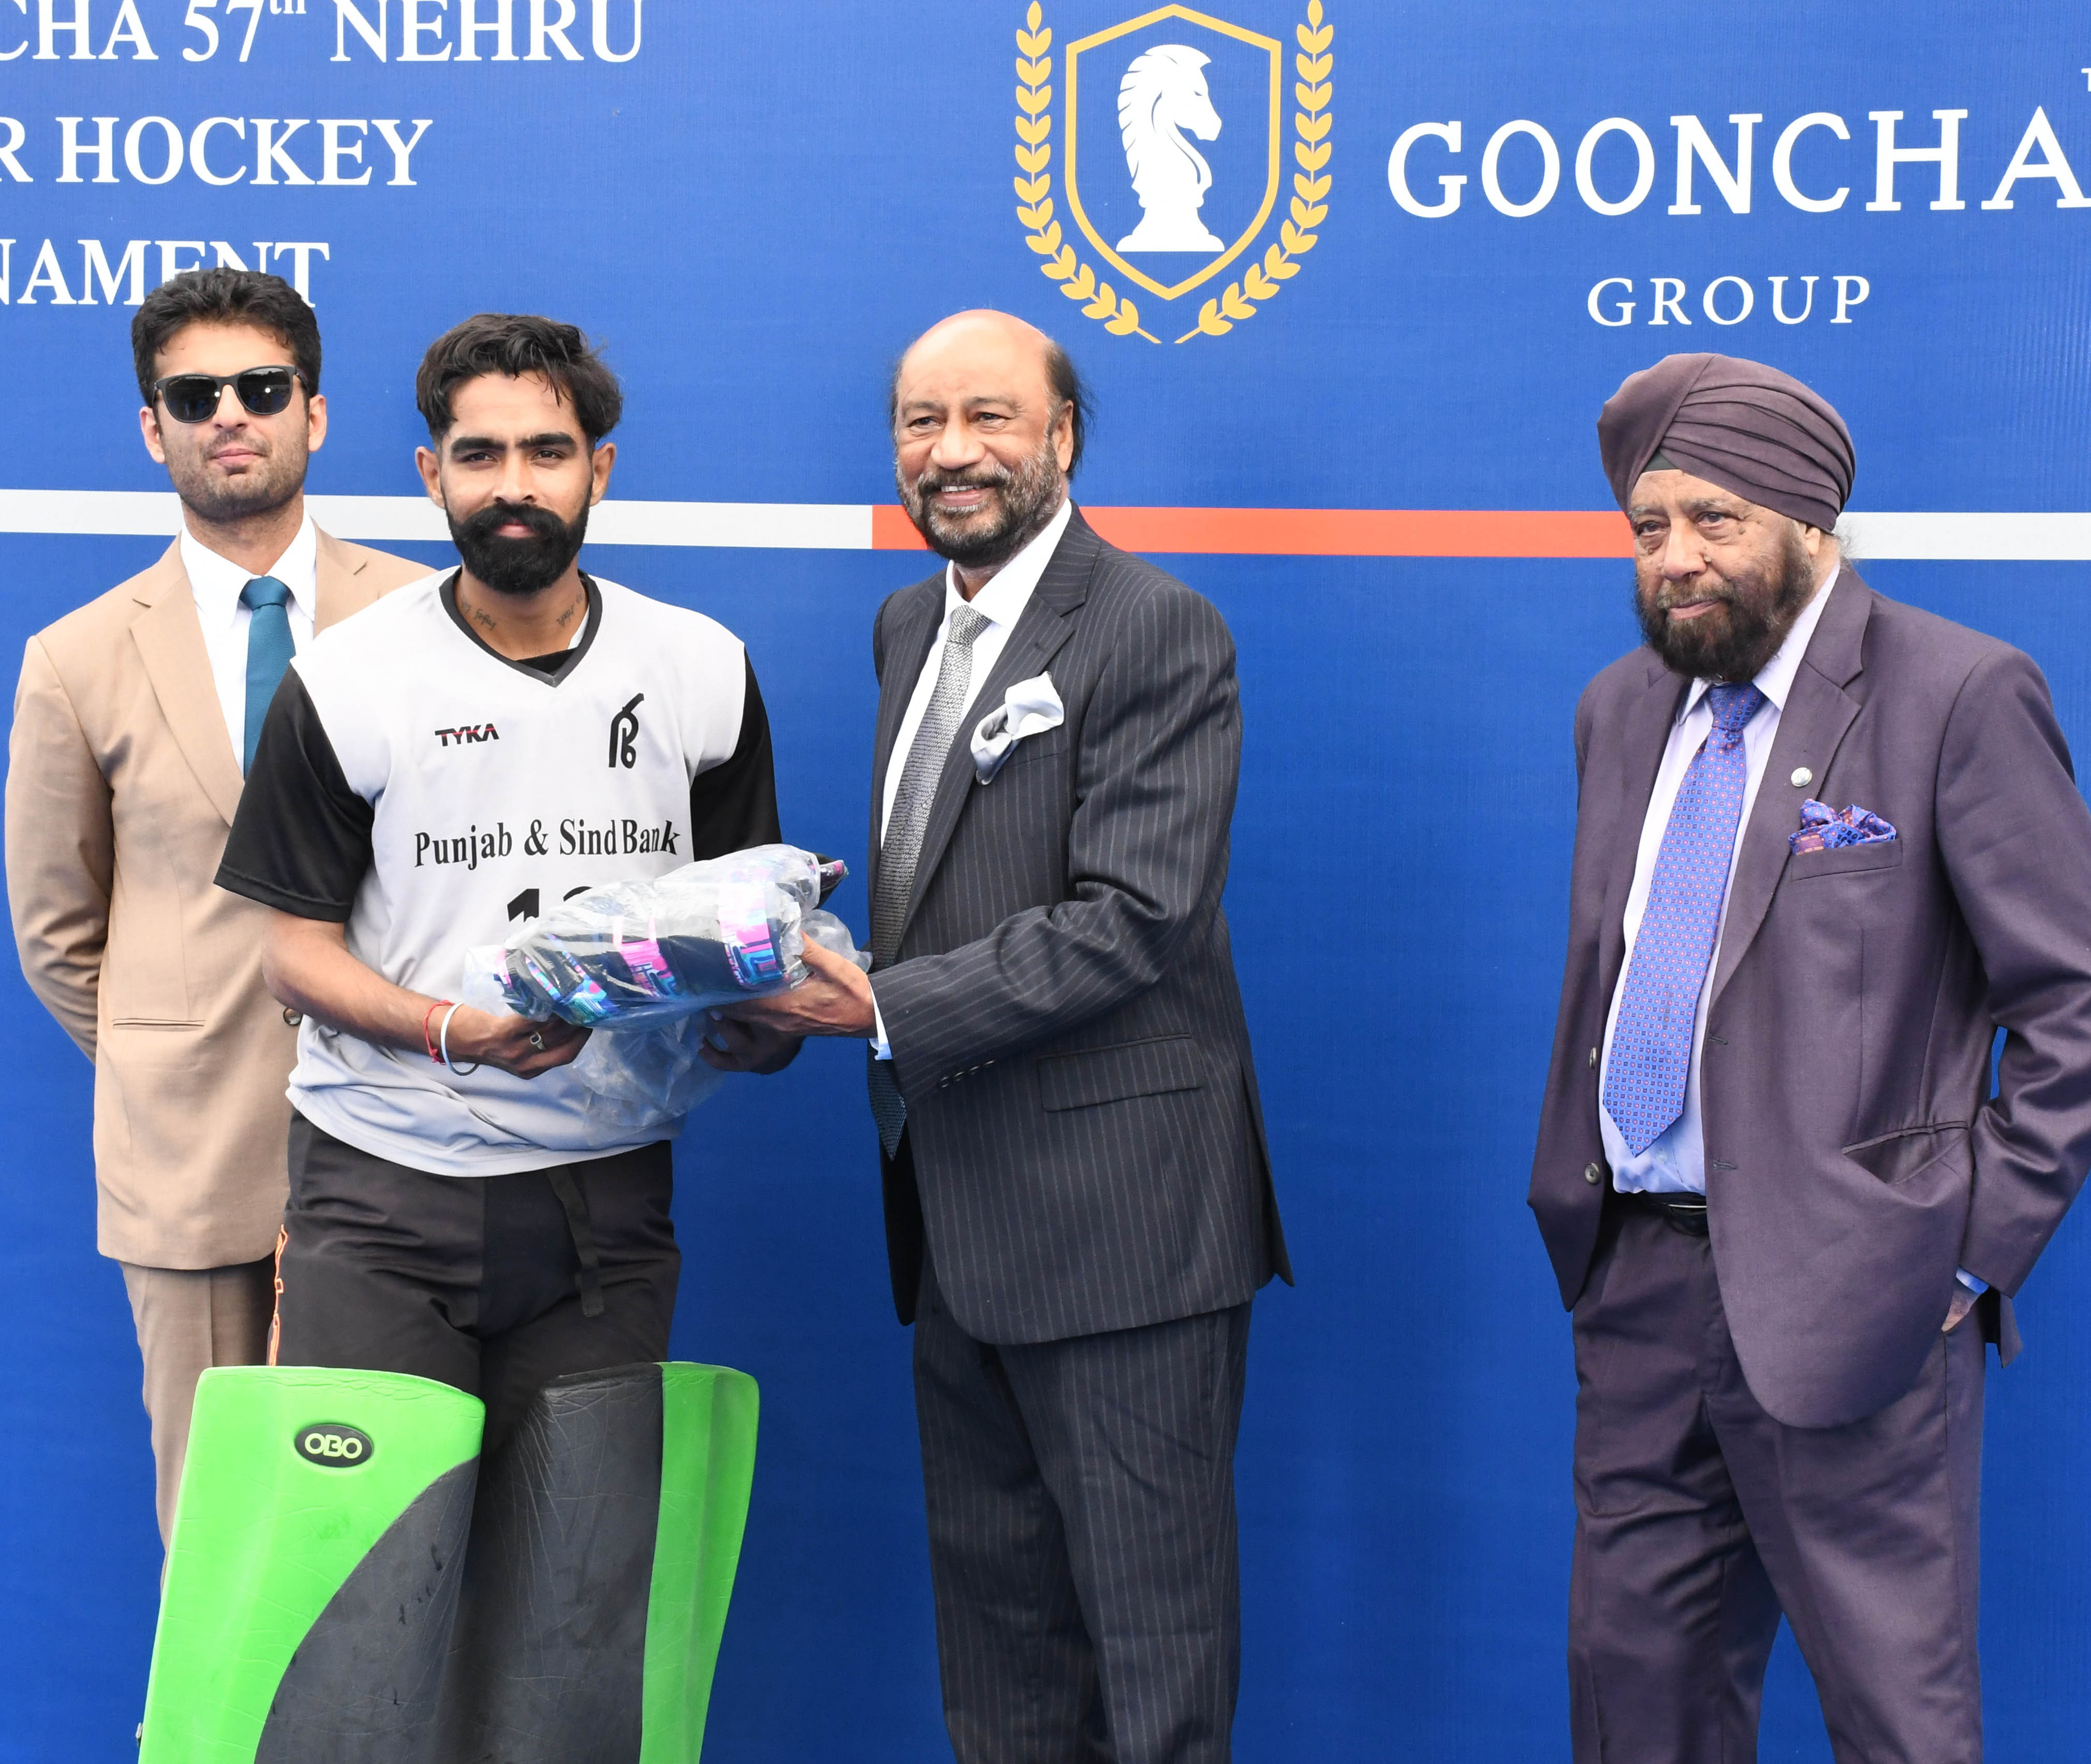 Punjab & Sind Bank registers 1-0 win over CAG XI, at the 'Gooncha 57th Nehru Senior Hockey Tournament’!